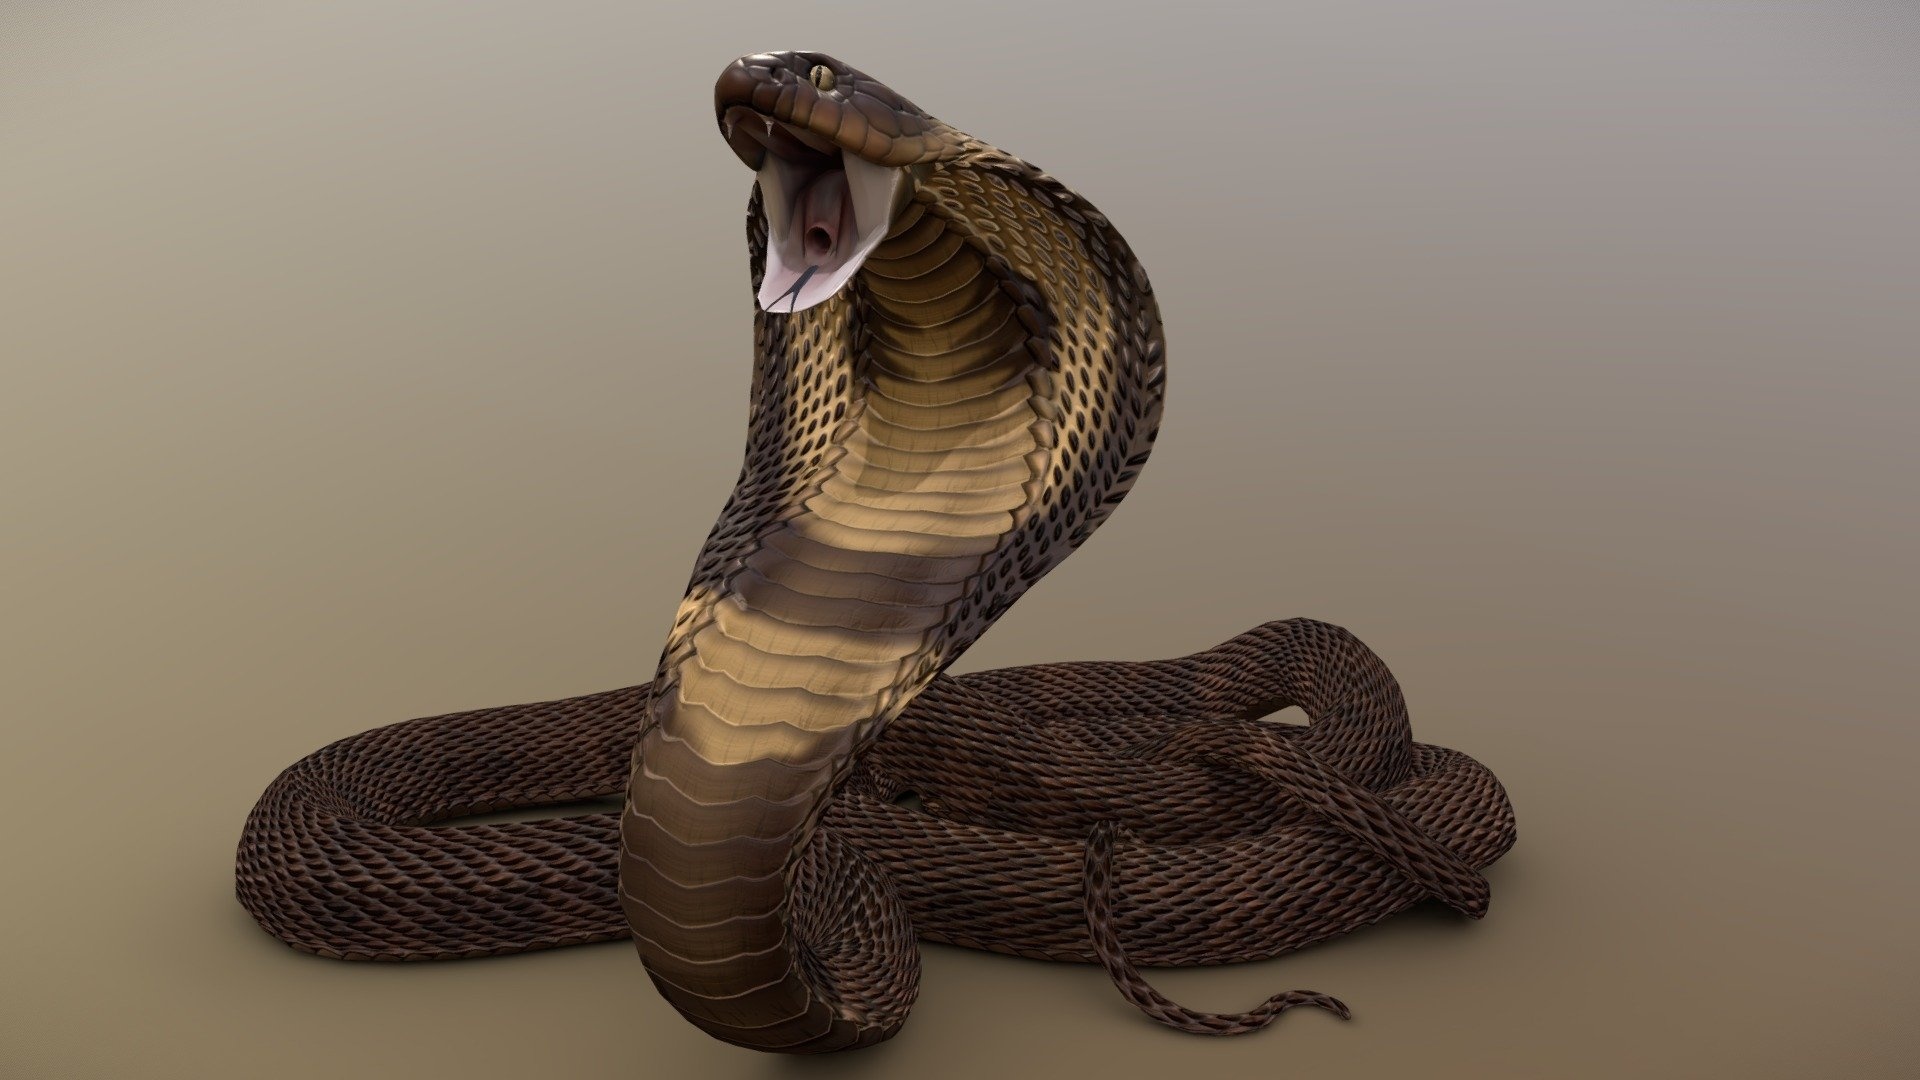 King Cobra, Striking pose, 3D model, Hypnotizing reptile, 1920x1080 Full HD Desktop